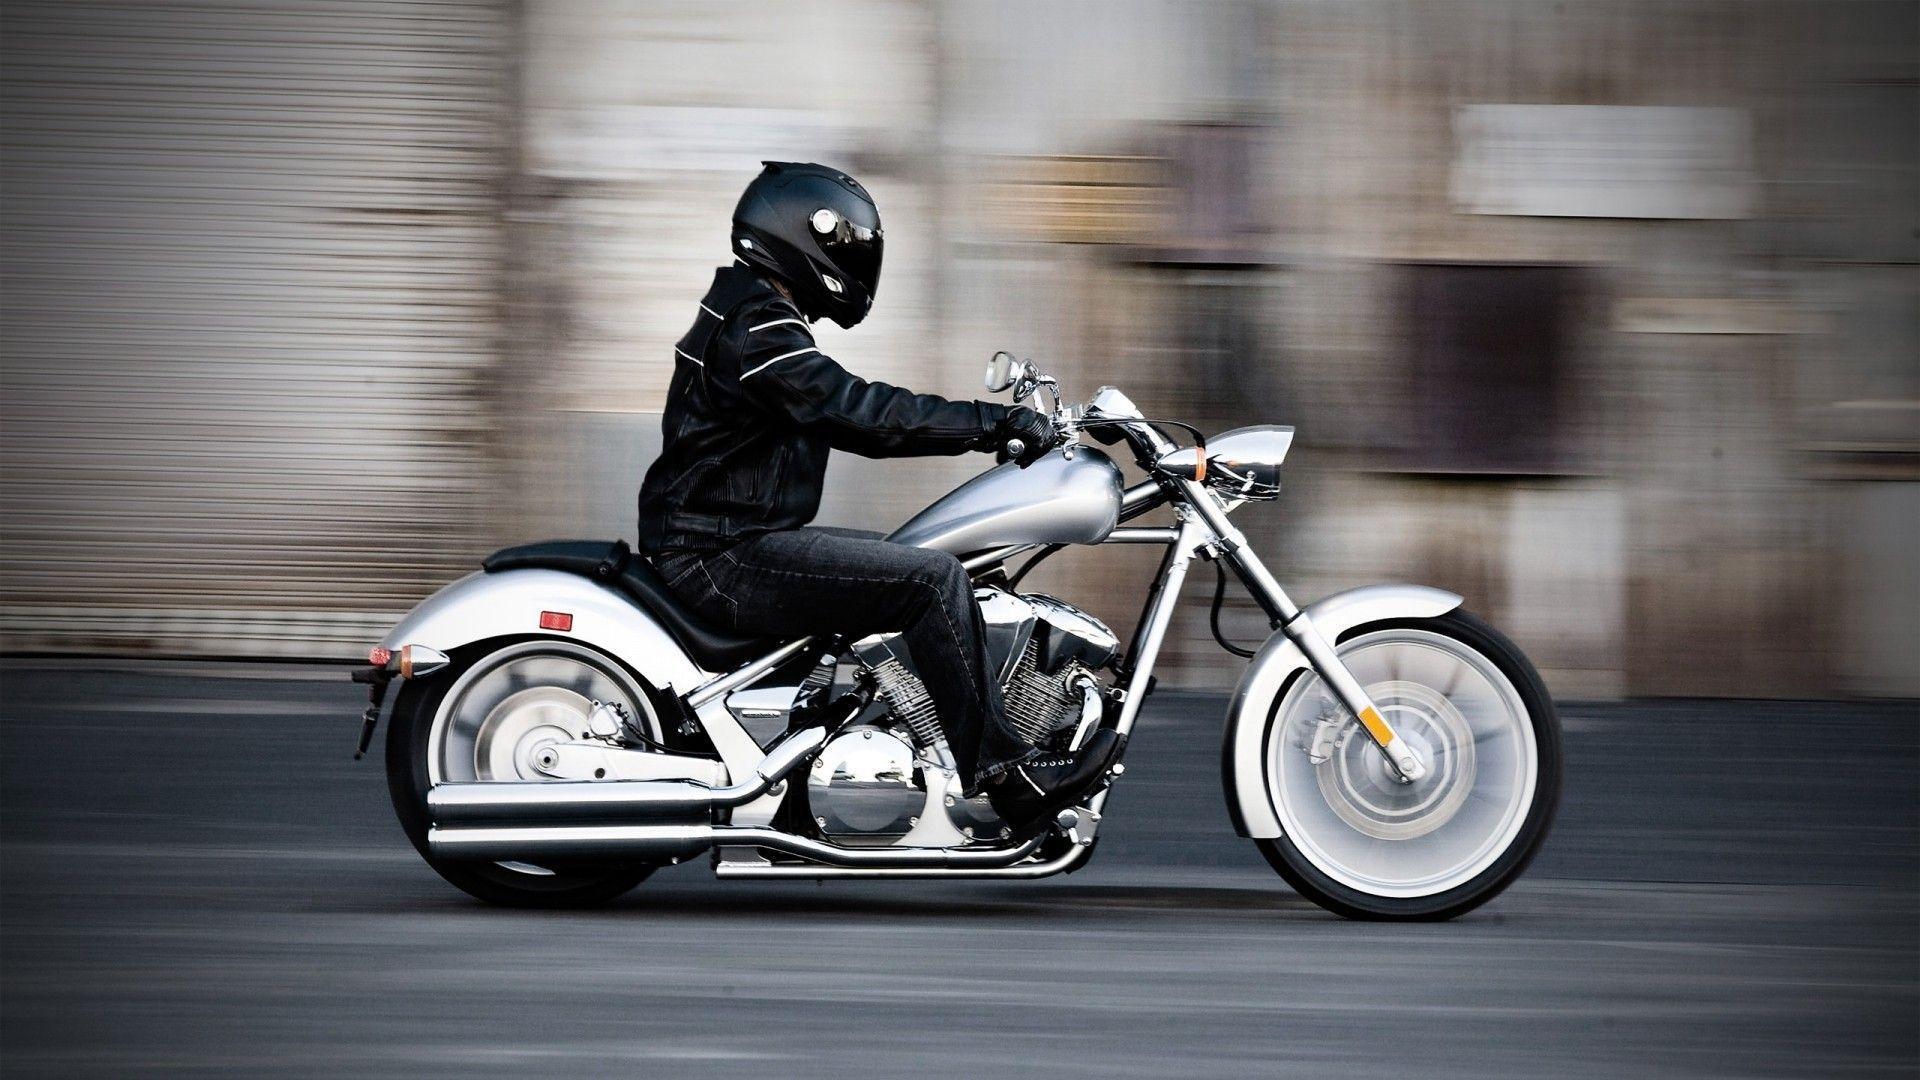 Awesome Harley Davidson Wallpaper 16886 1920x1080 px HDWallSource